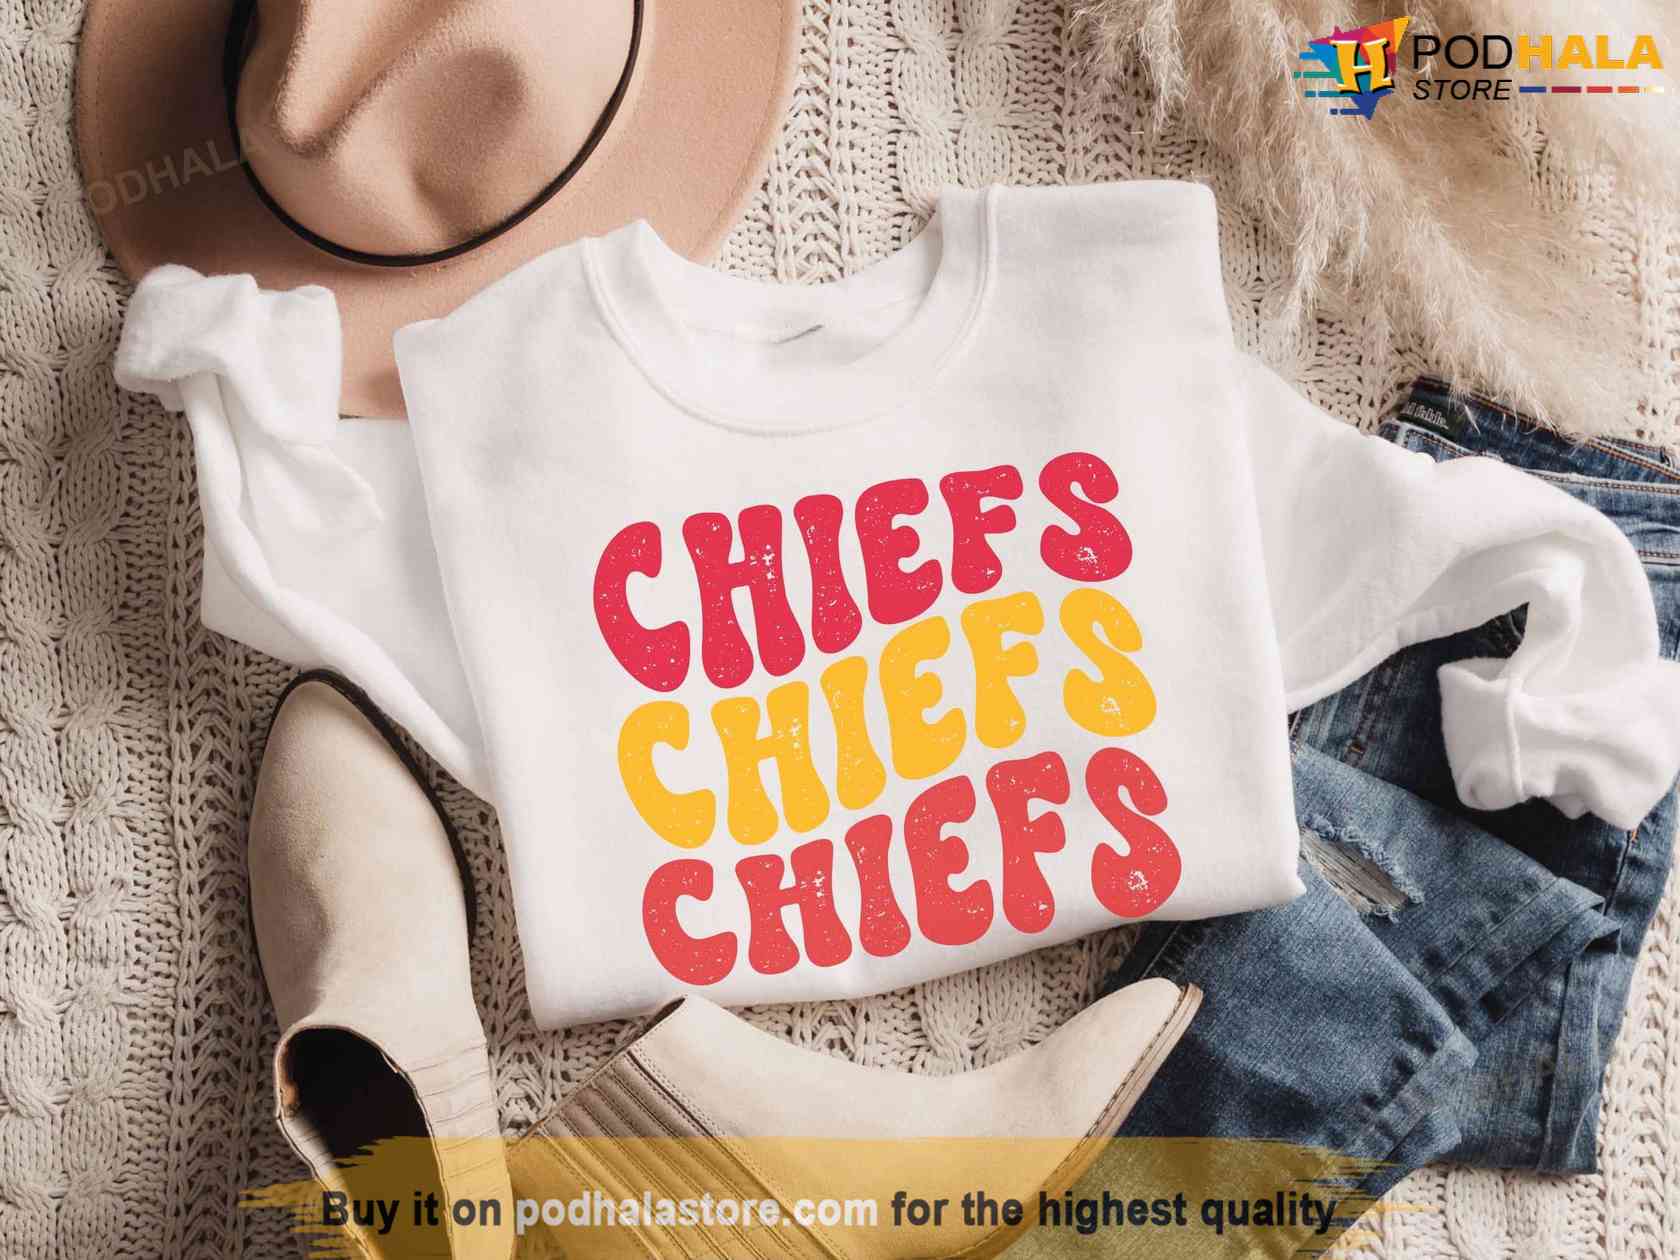 kc chiefs womens sweatshirt